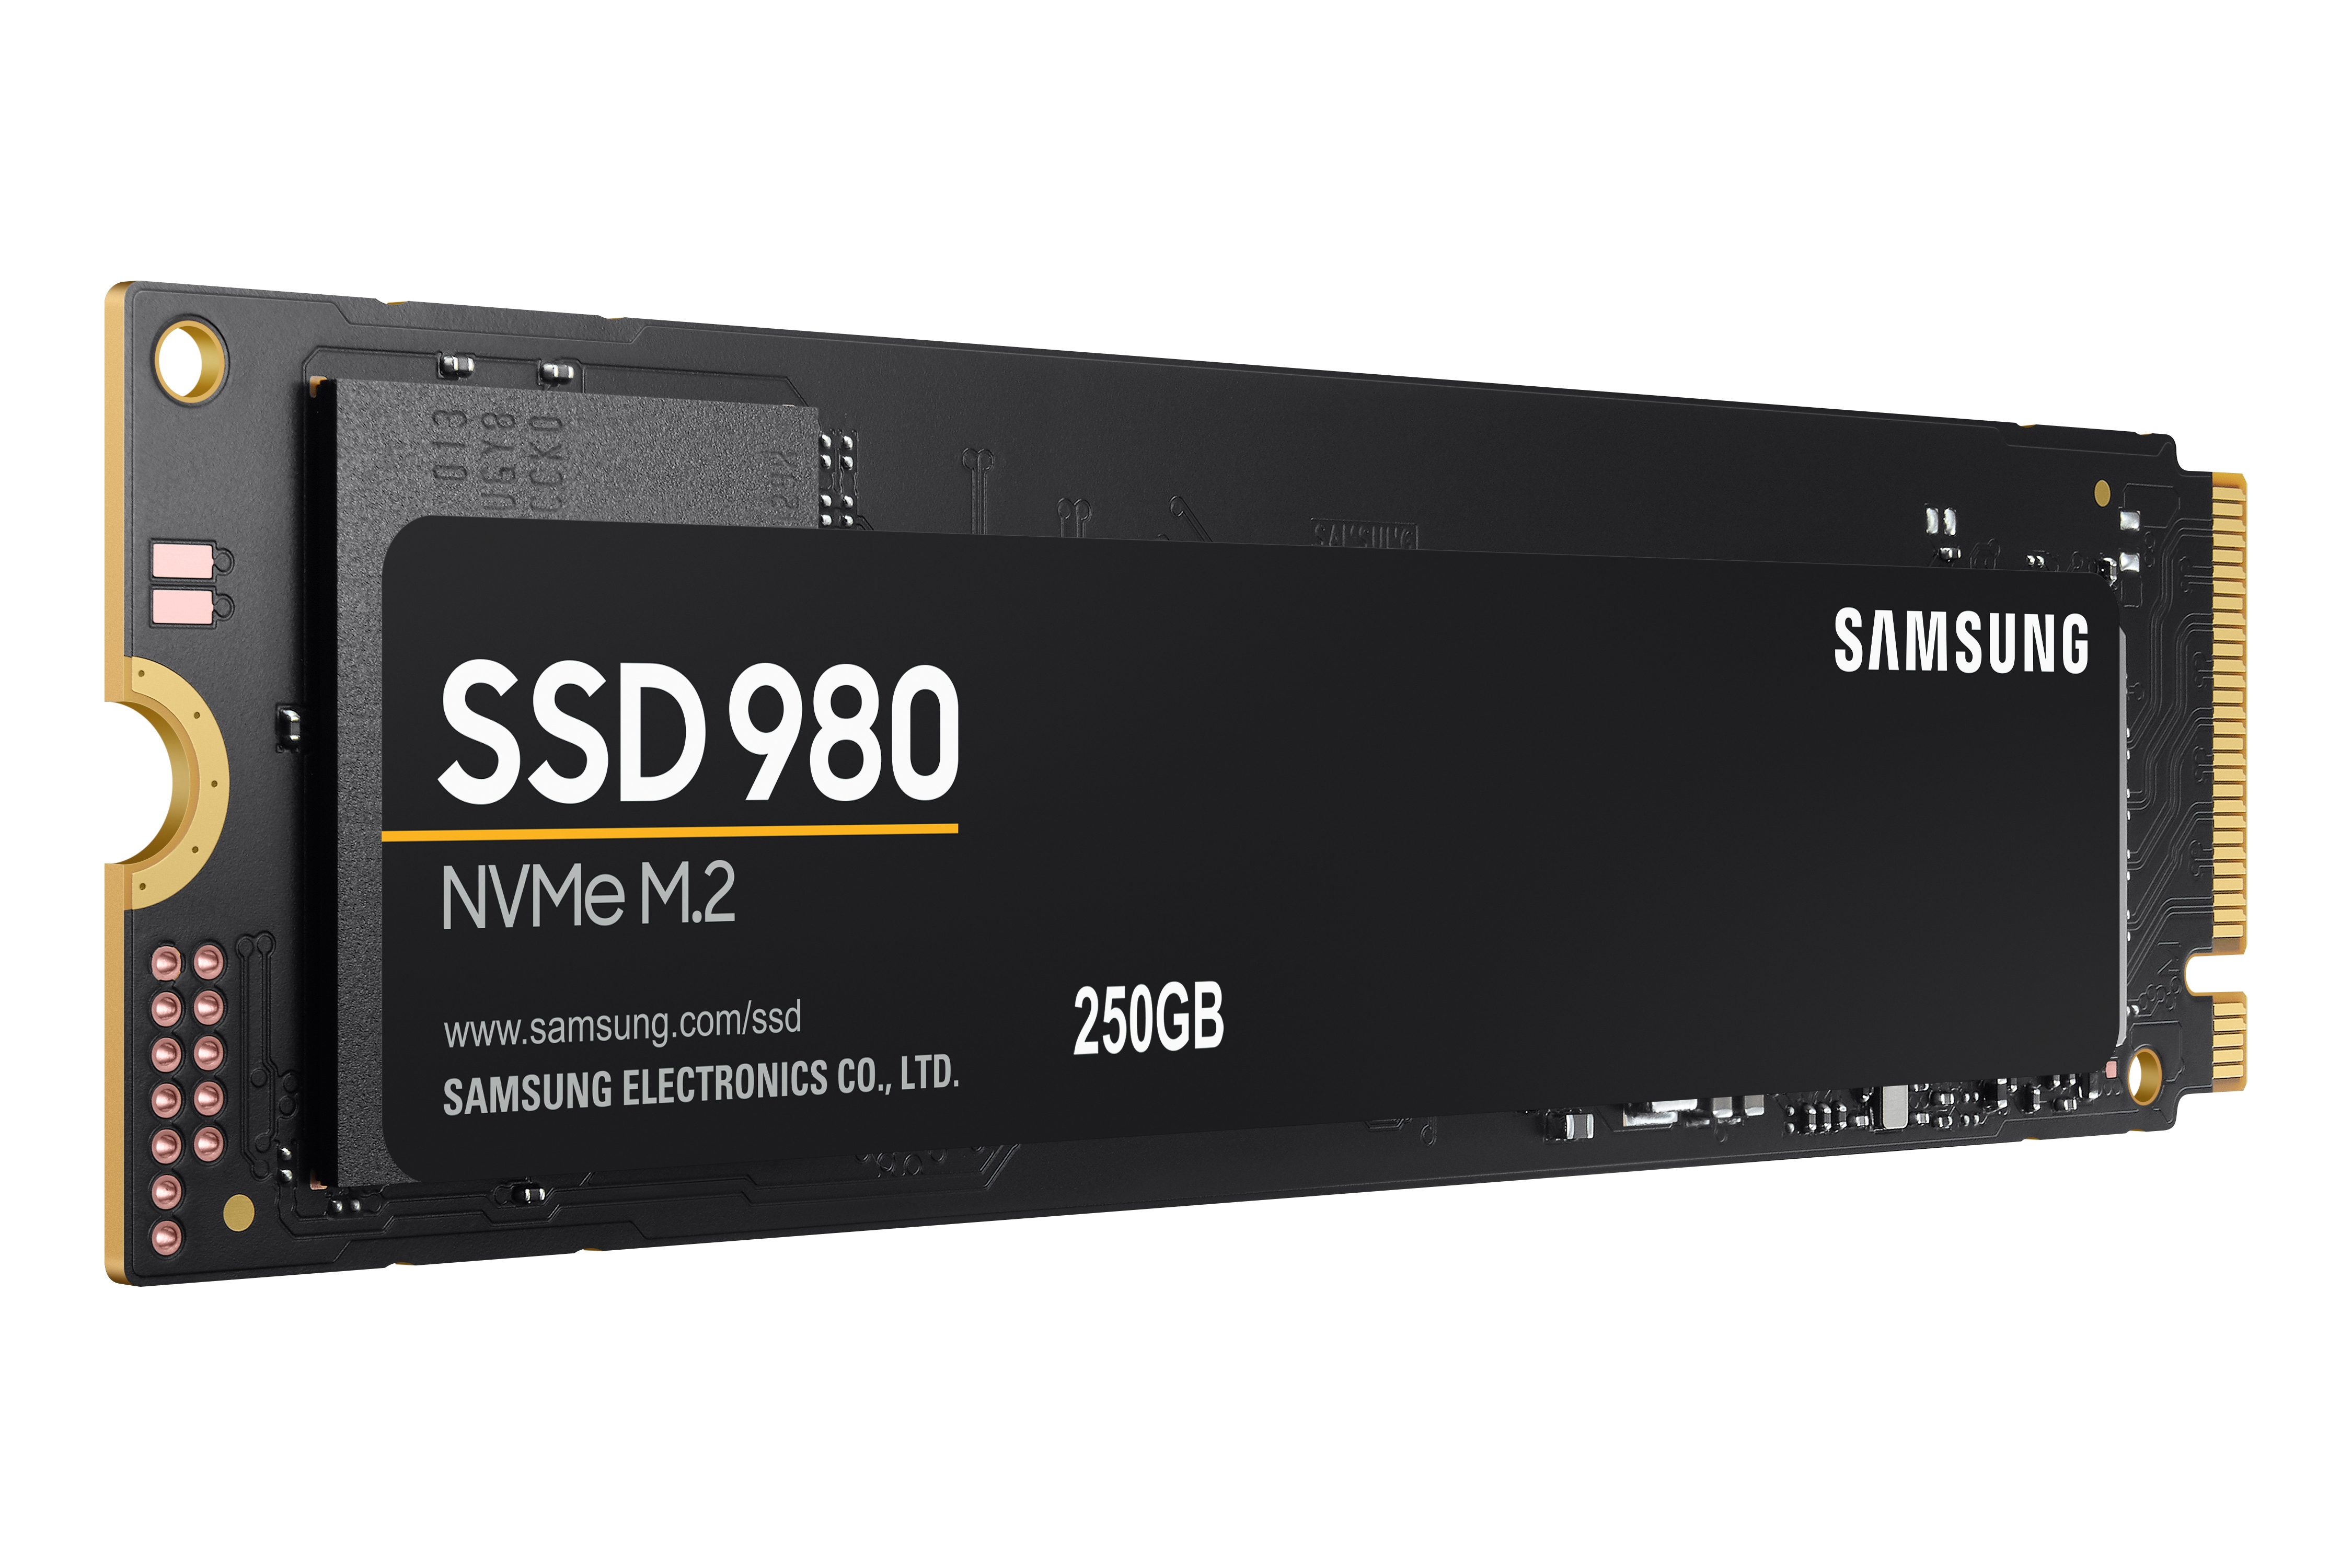 ga werken repertoire dutje Solid State Drives - Internal SSDs | Samsung US